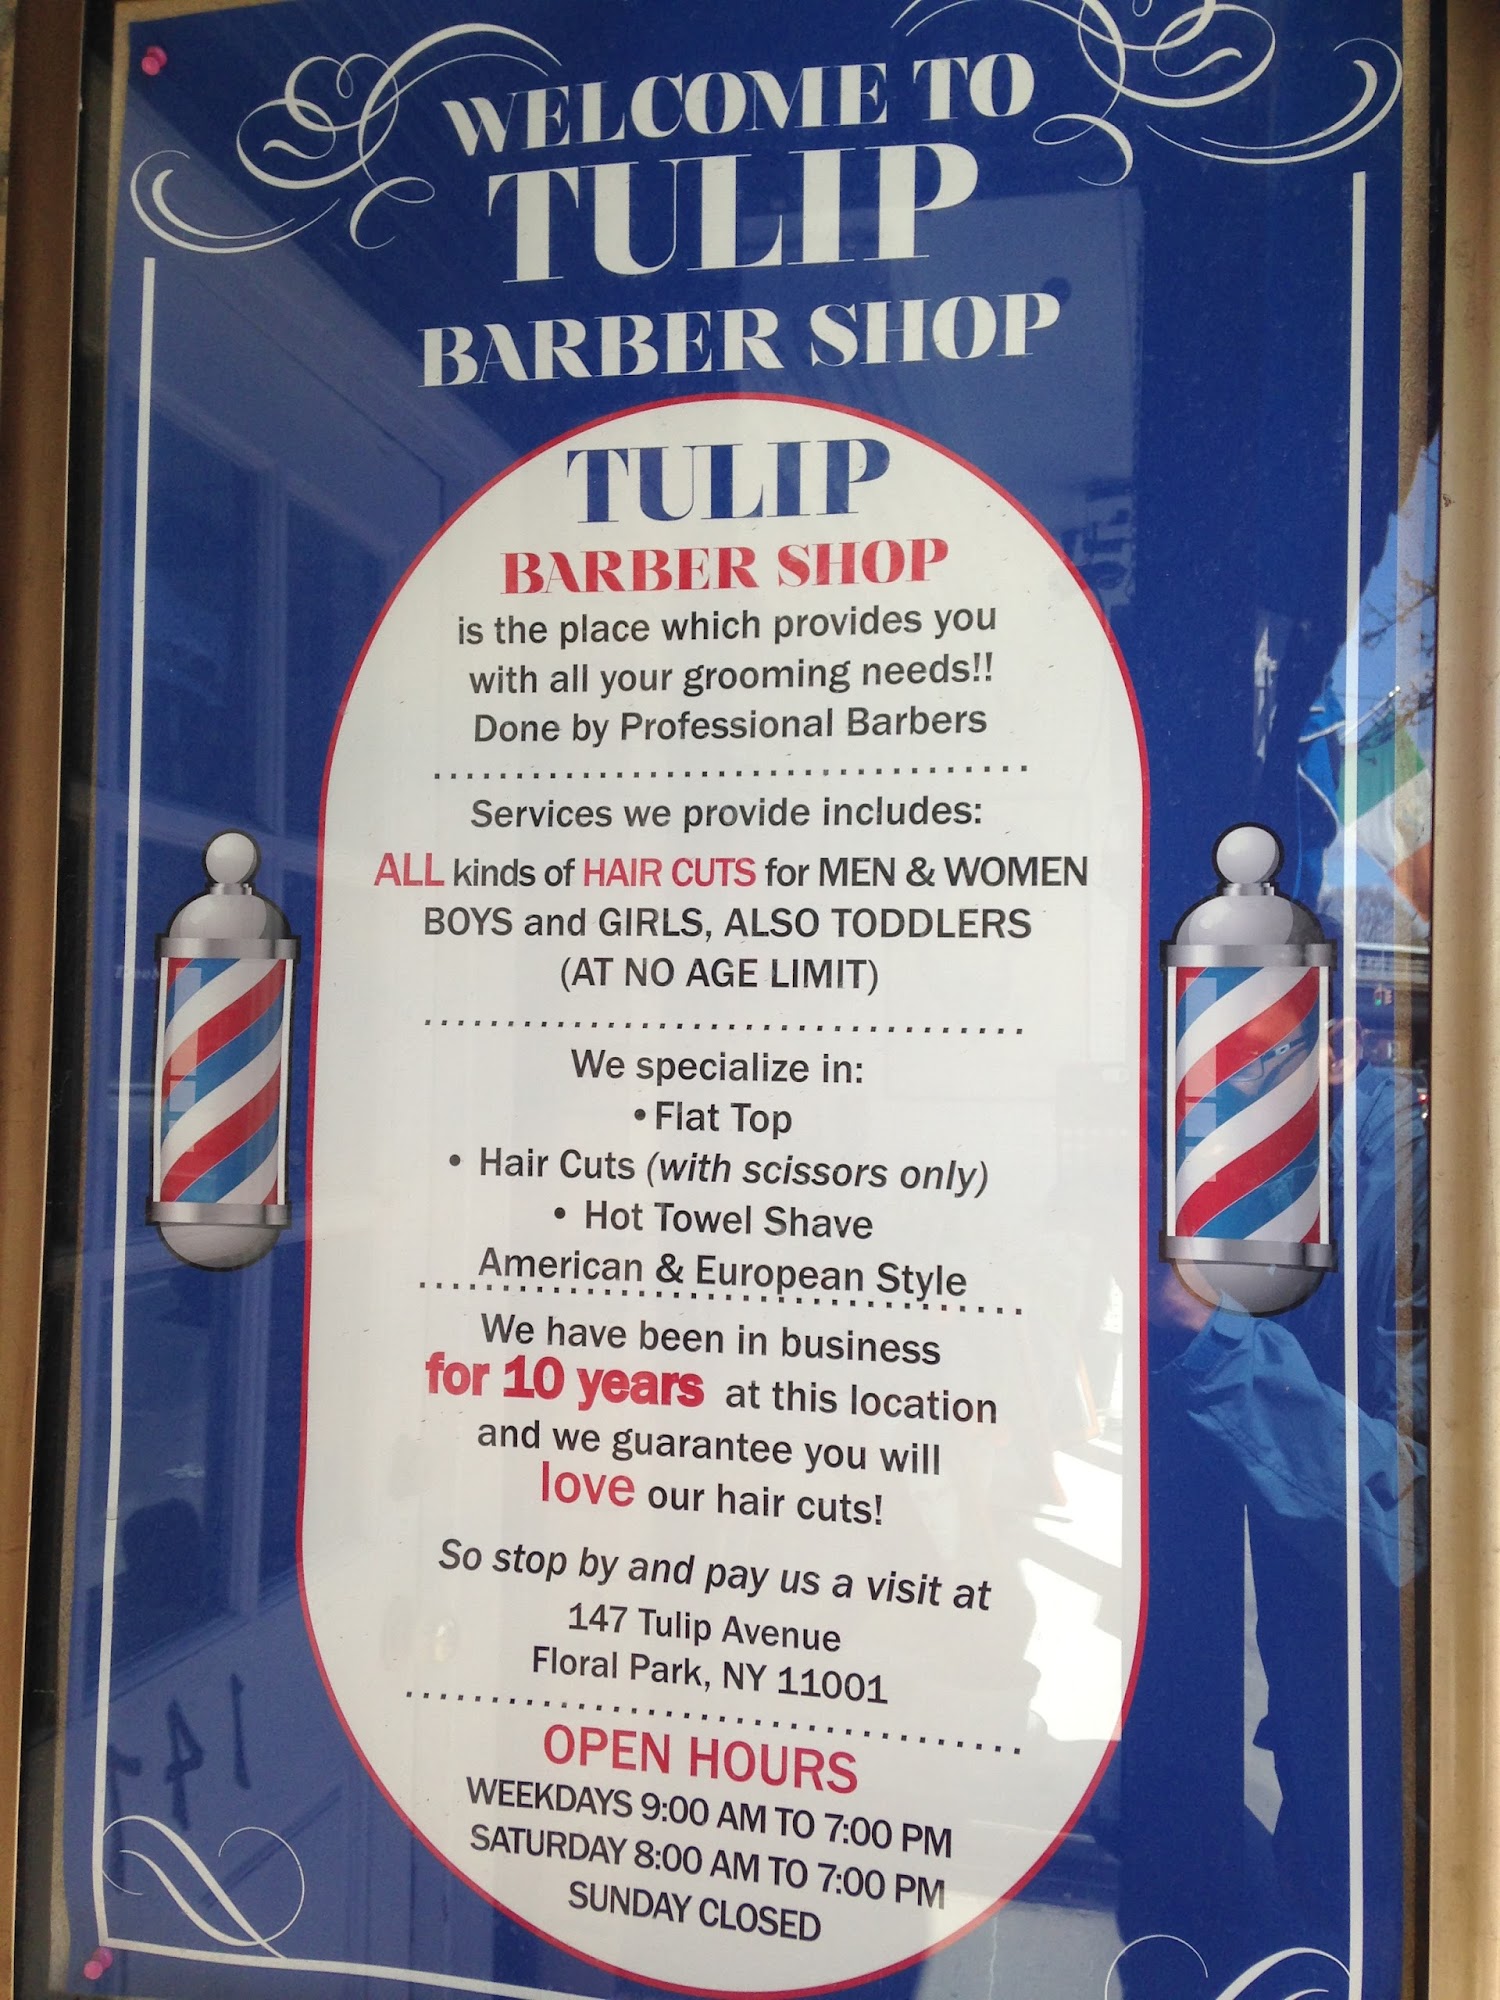 Tulip Barber Shop 147 Tulip Ave, Floral Park New York 11001